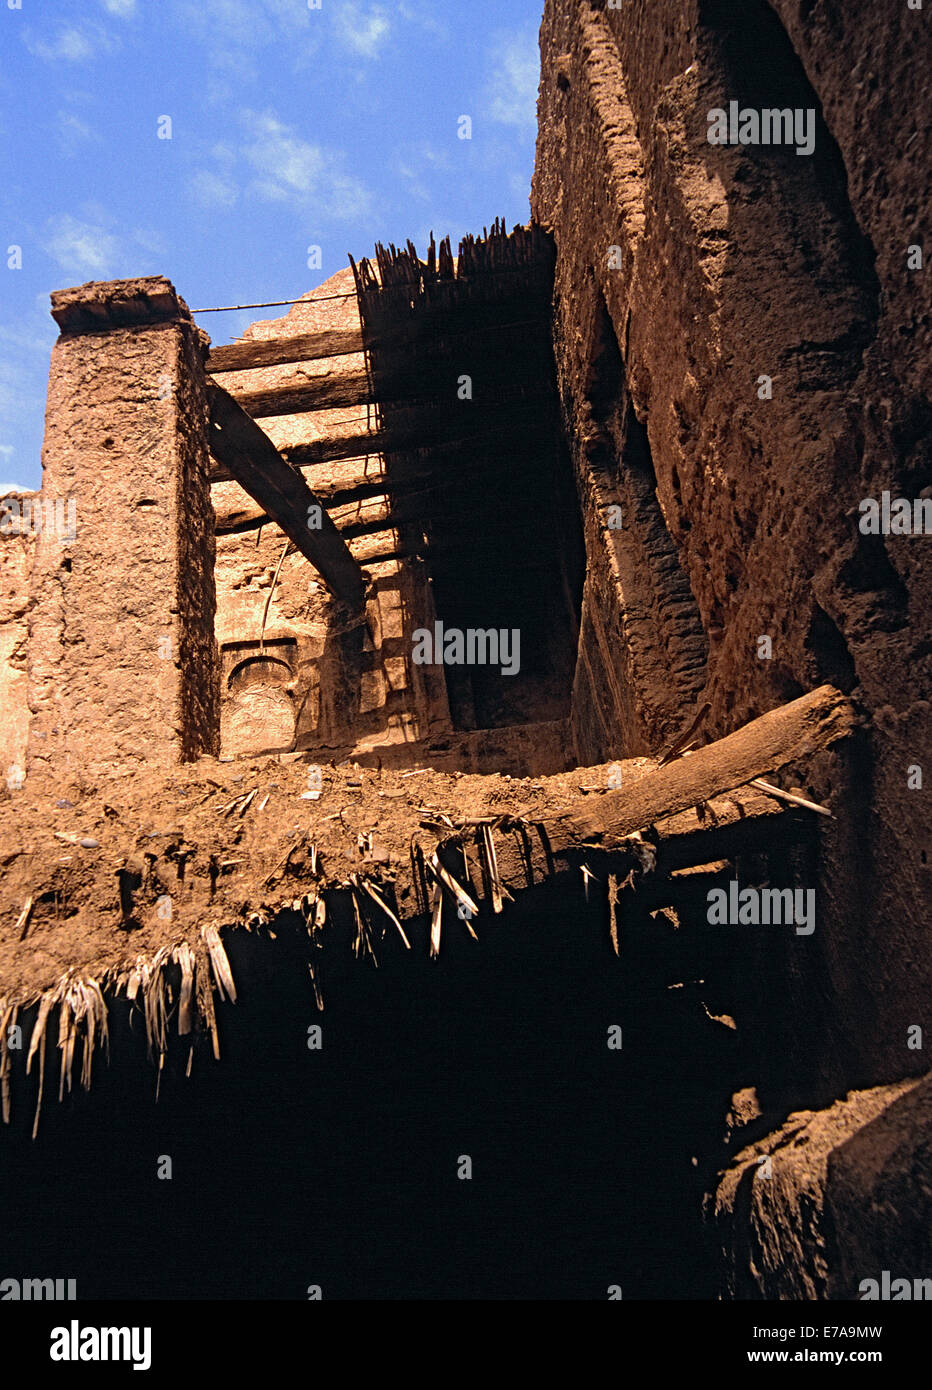 Low angle view of mud hut, Agdz, Morocco Stock Photo